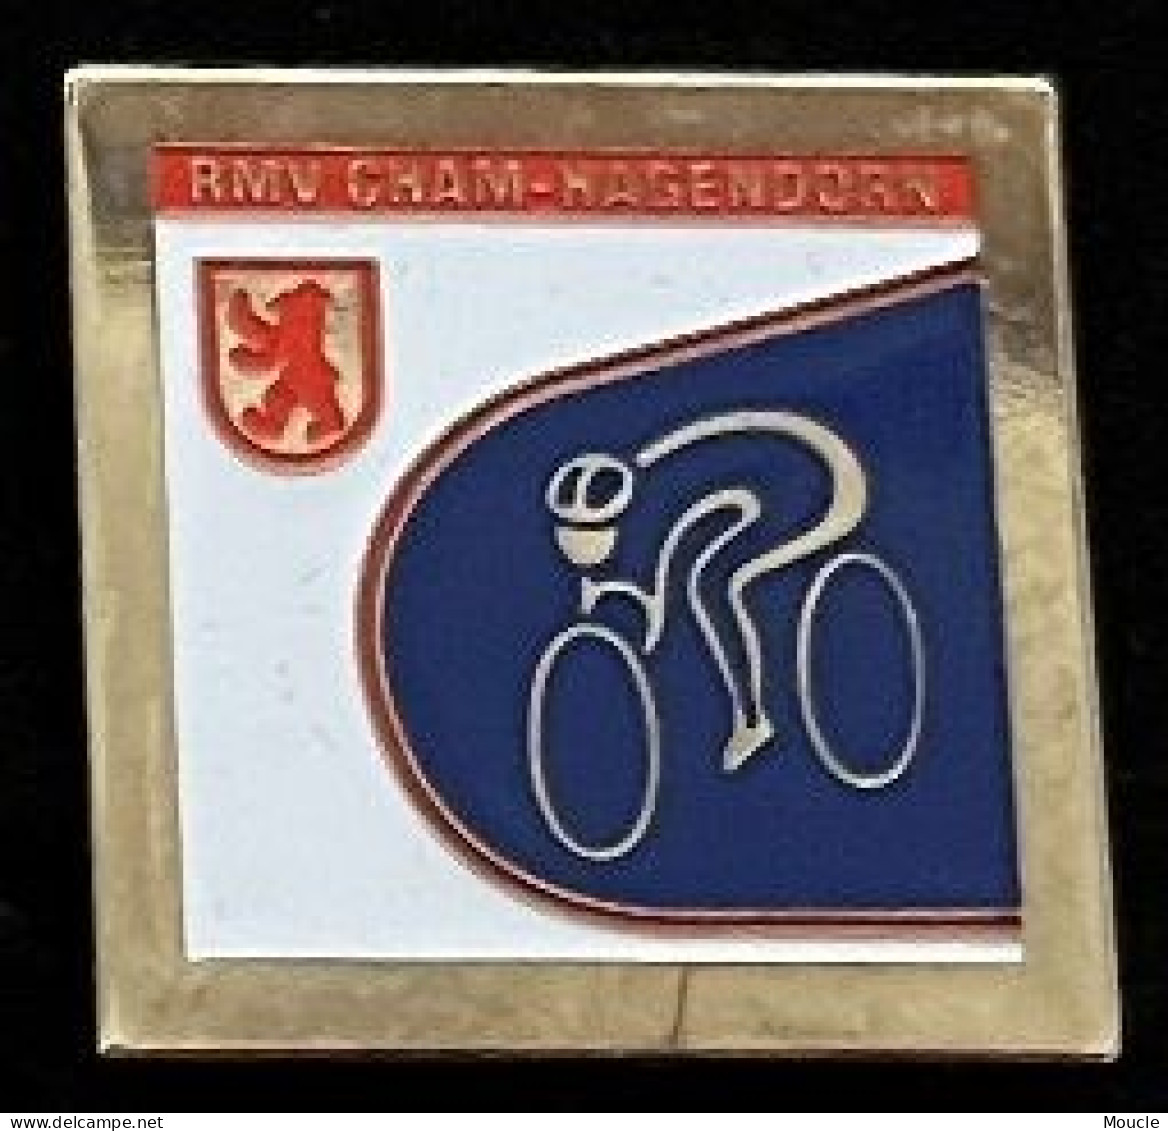 CYCLISME - VELO - BIKE - CYCLISTE - CYCLES - RMV - VELO CLUB - CHAM - HAGENDORN - SUISSE - SCHWEIZ - SWITZERLAND -  (33) - Ciclismo